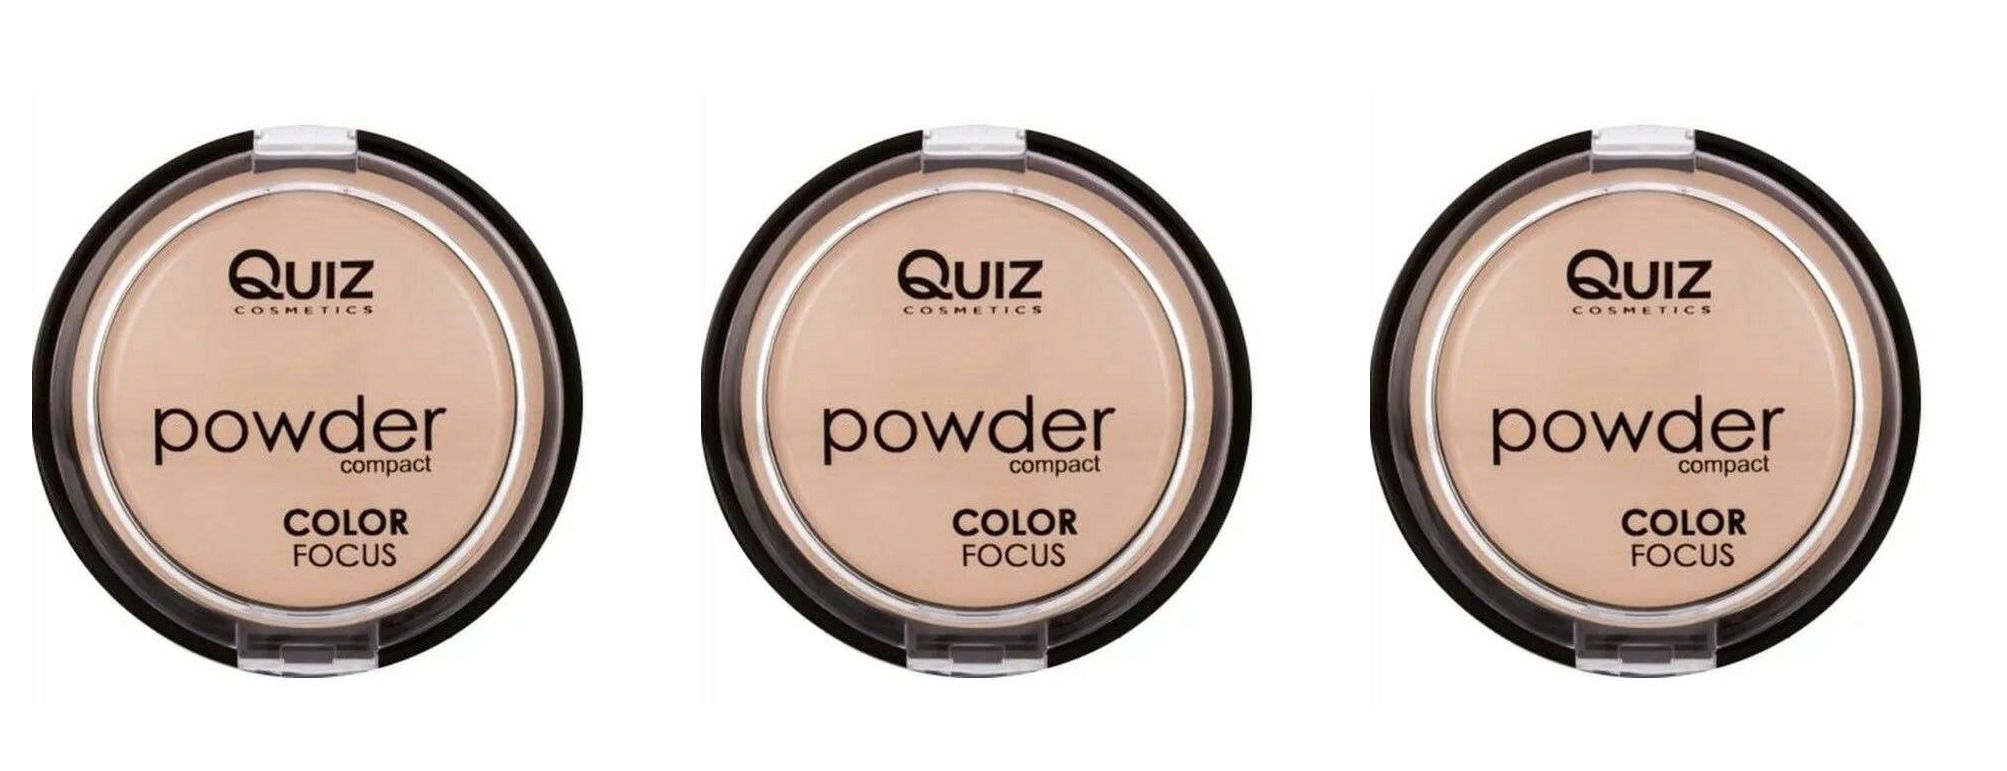 Пудра компактная Quiz cosmetics, Powder Focus, Color 60, 3 шт пудра mac cosmetics studio fix powder plus foundation тон nw20 15 г